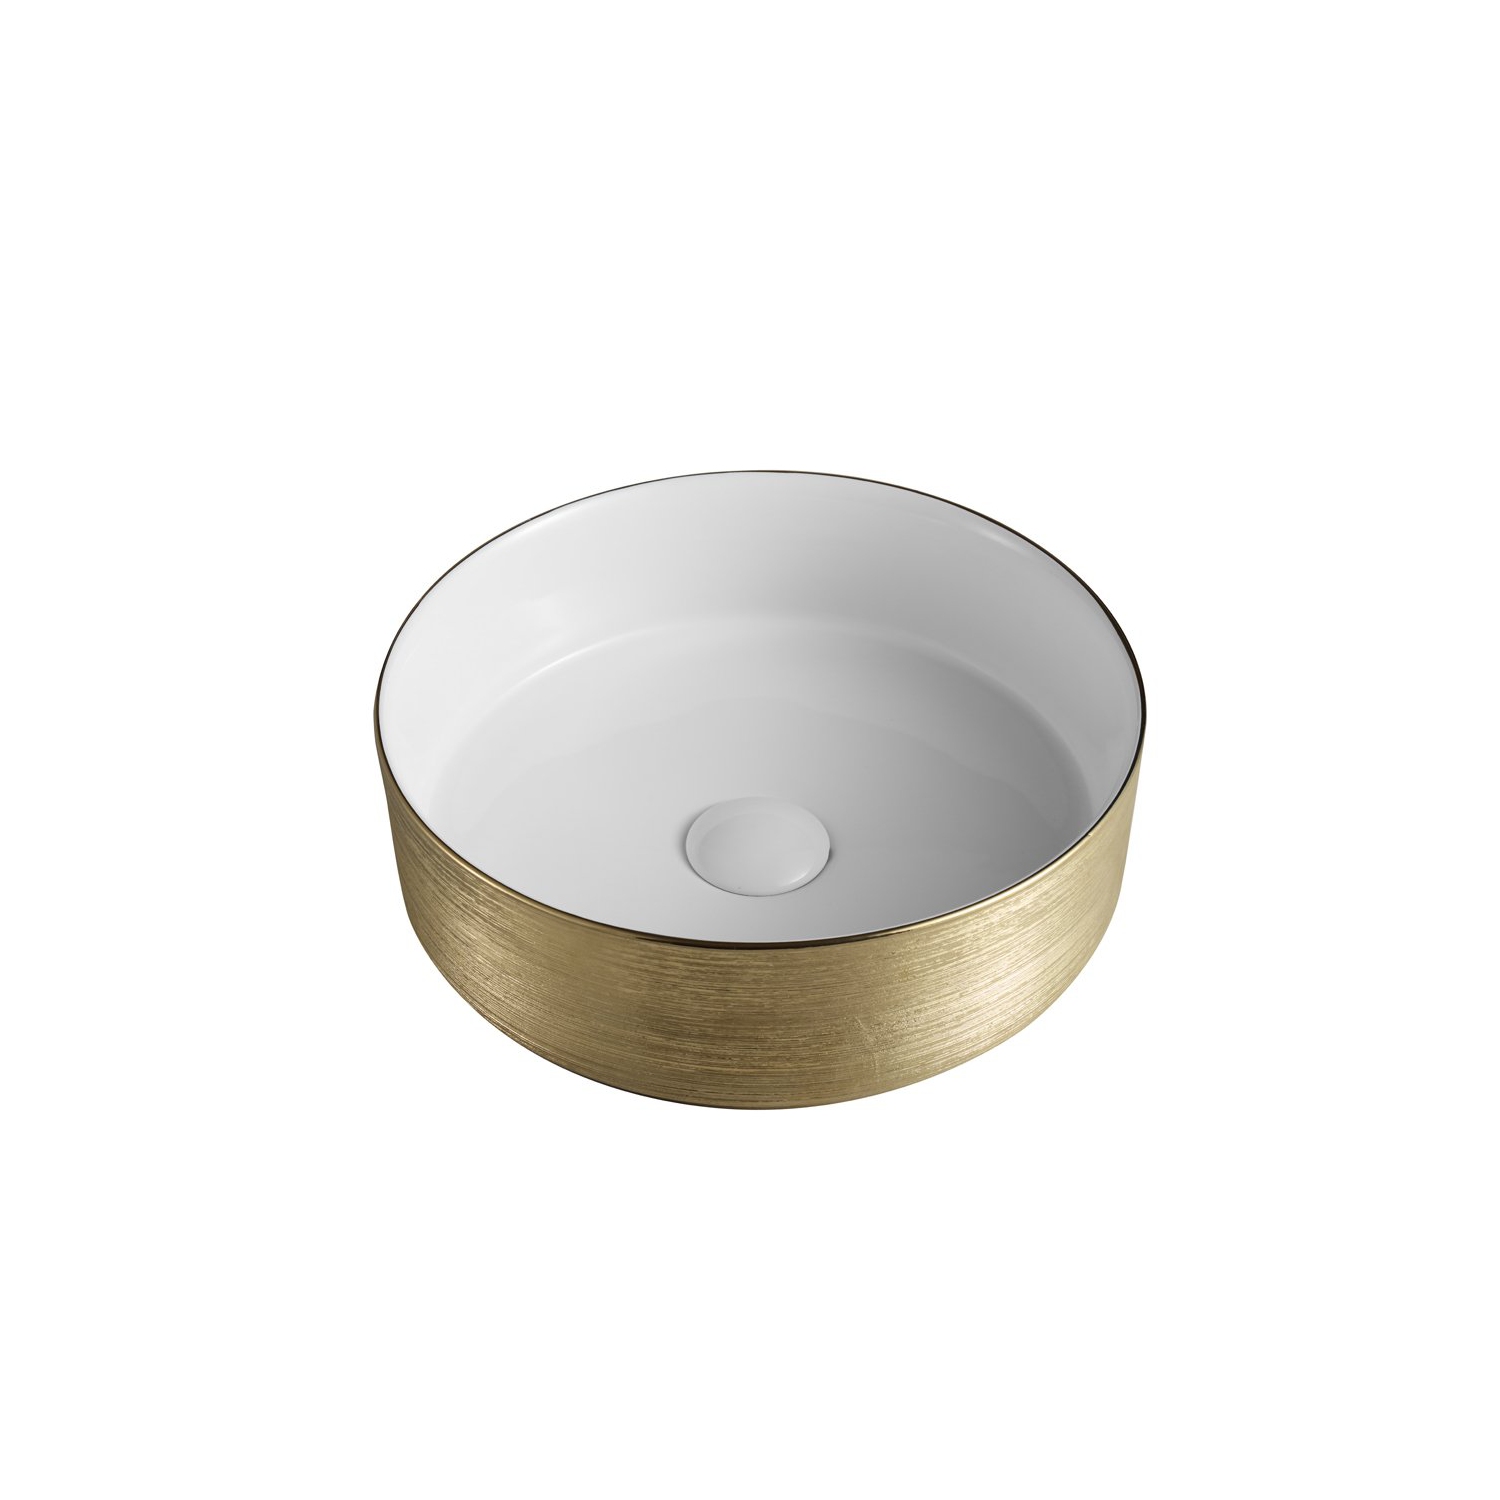 FRIDO-GD Bathroom Sink Round Modern Gold & White Ceramic Vessel w/ Pop Up Drain, By Agua Canada